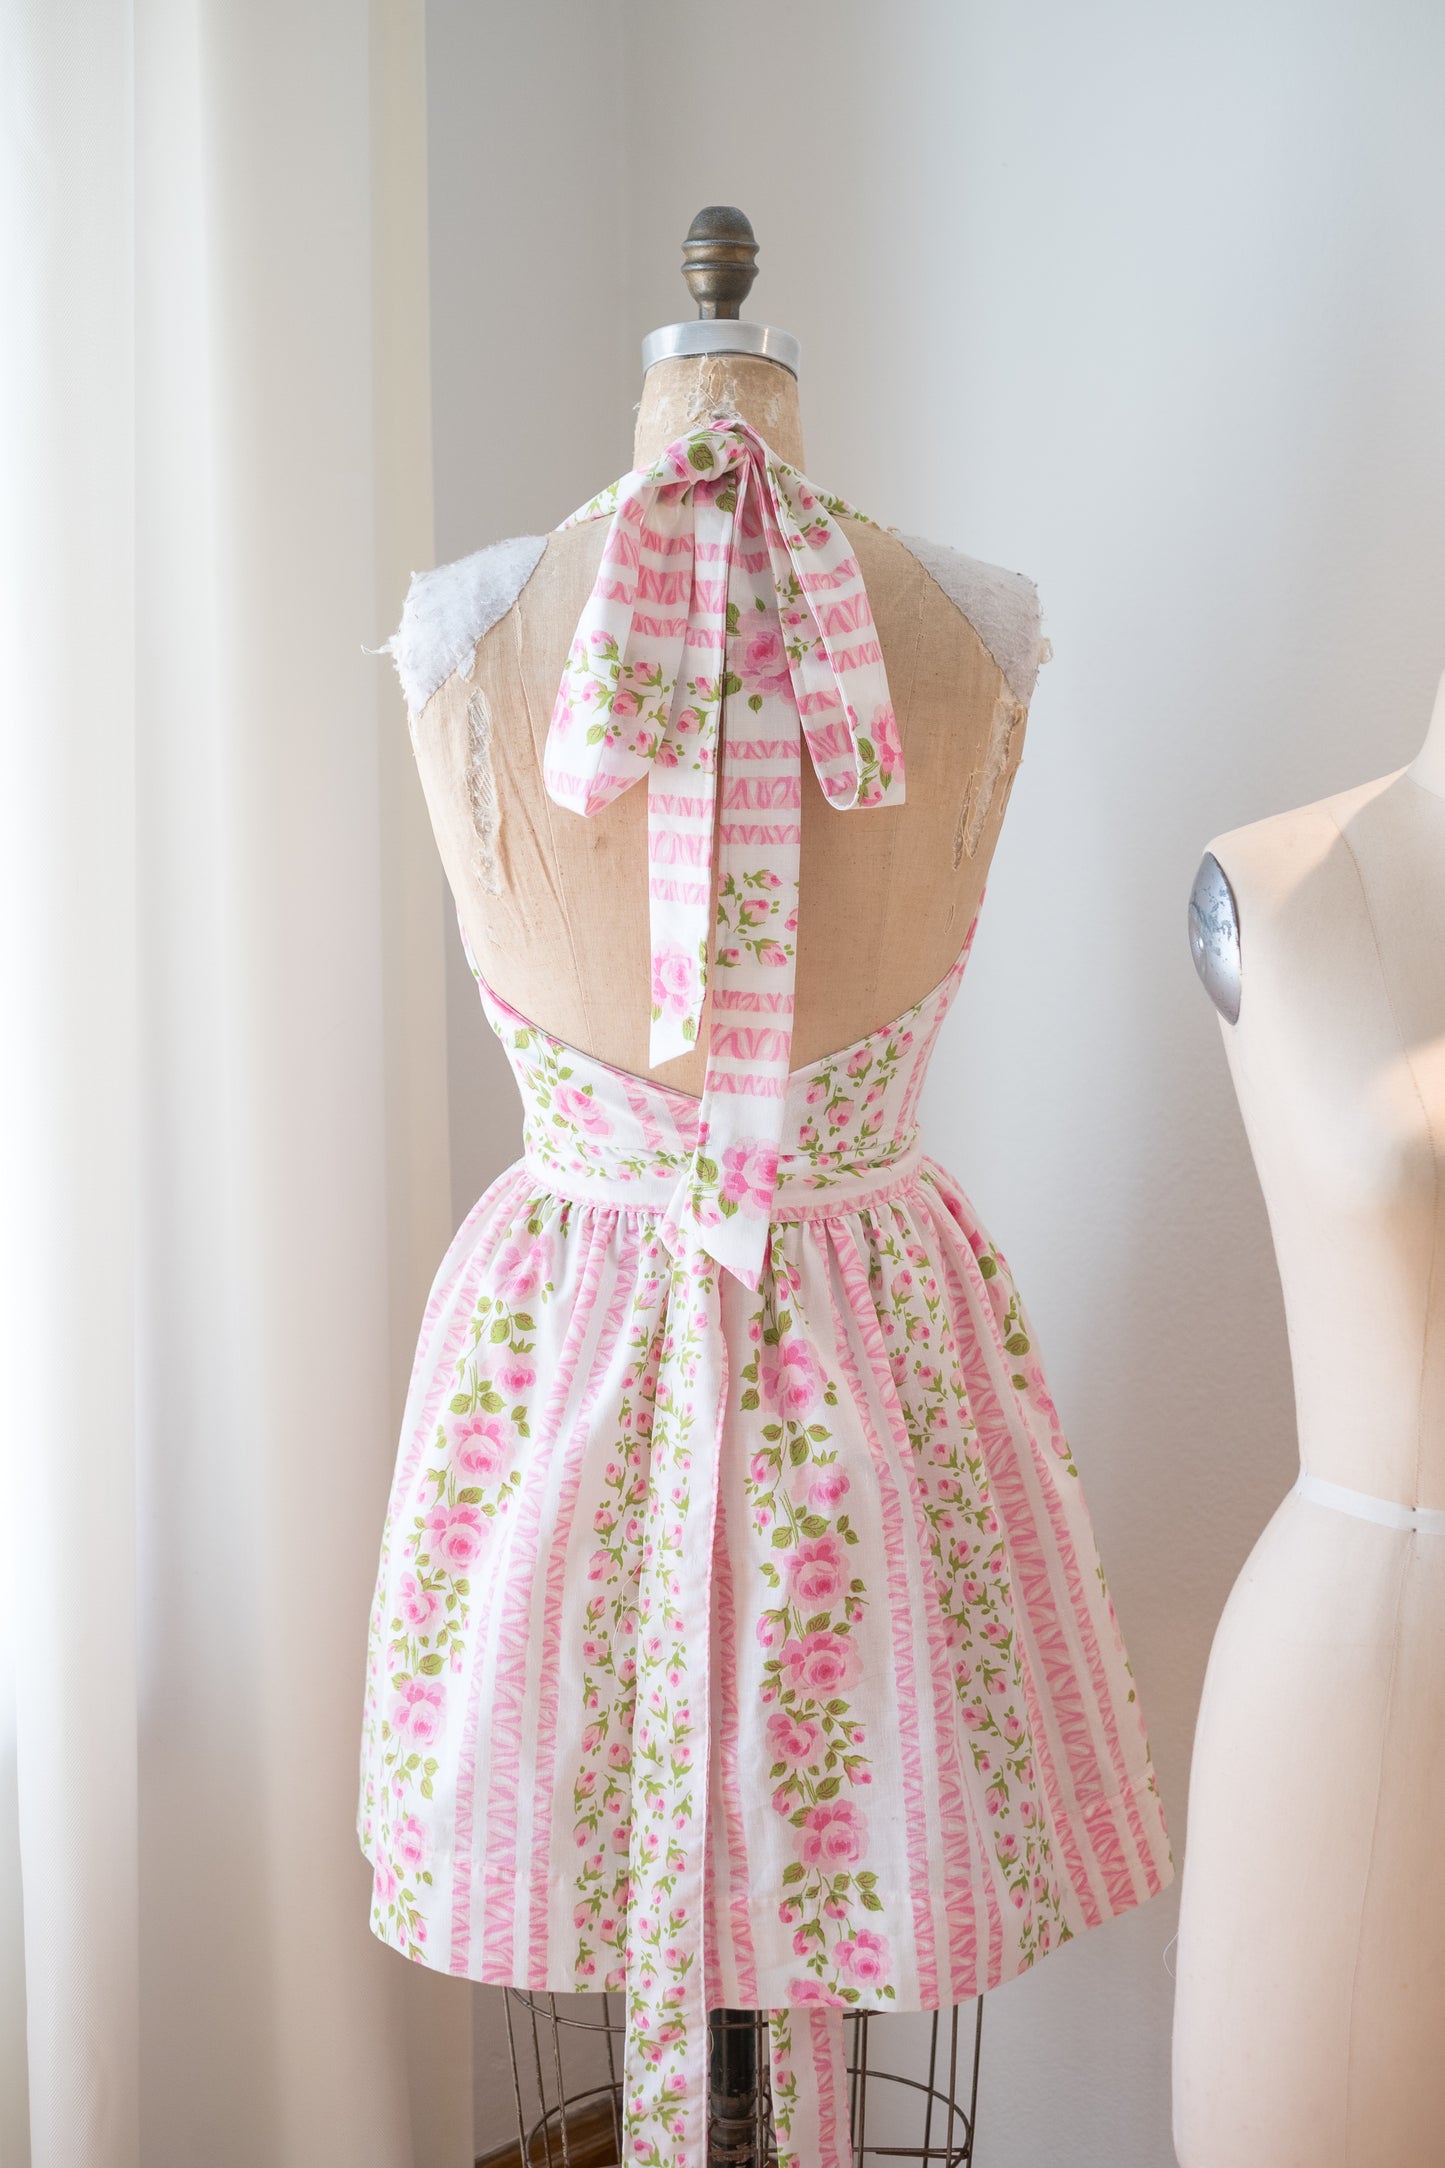 Handmade vintage floral apron set - retro pink